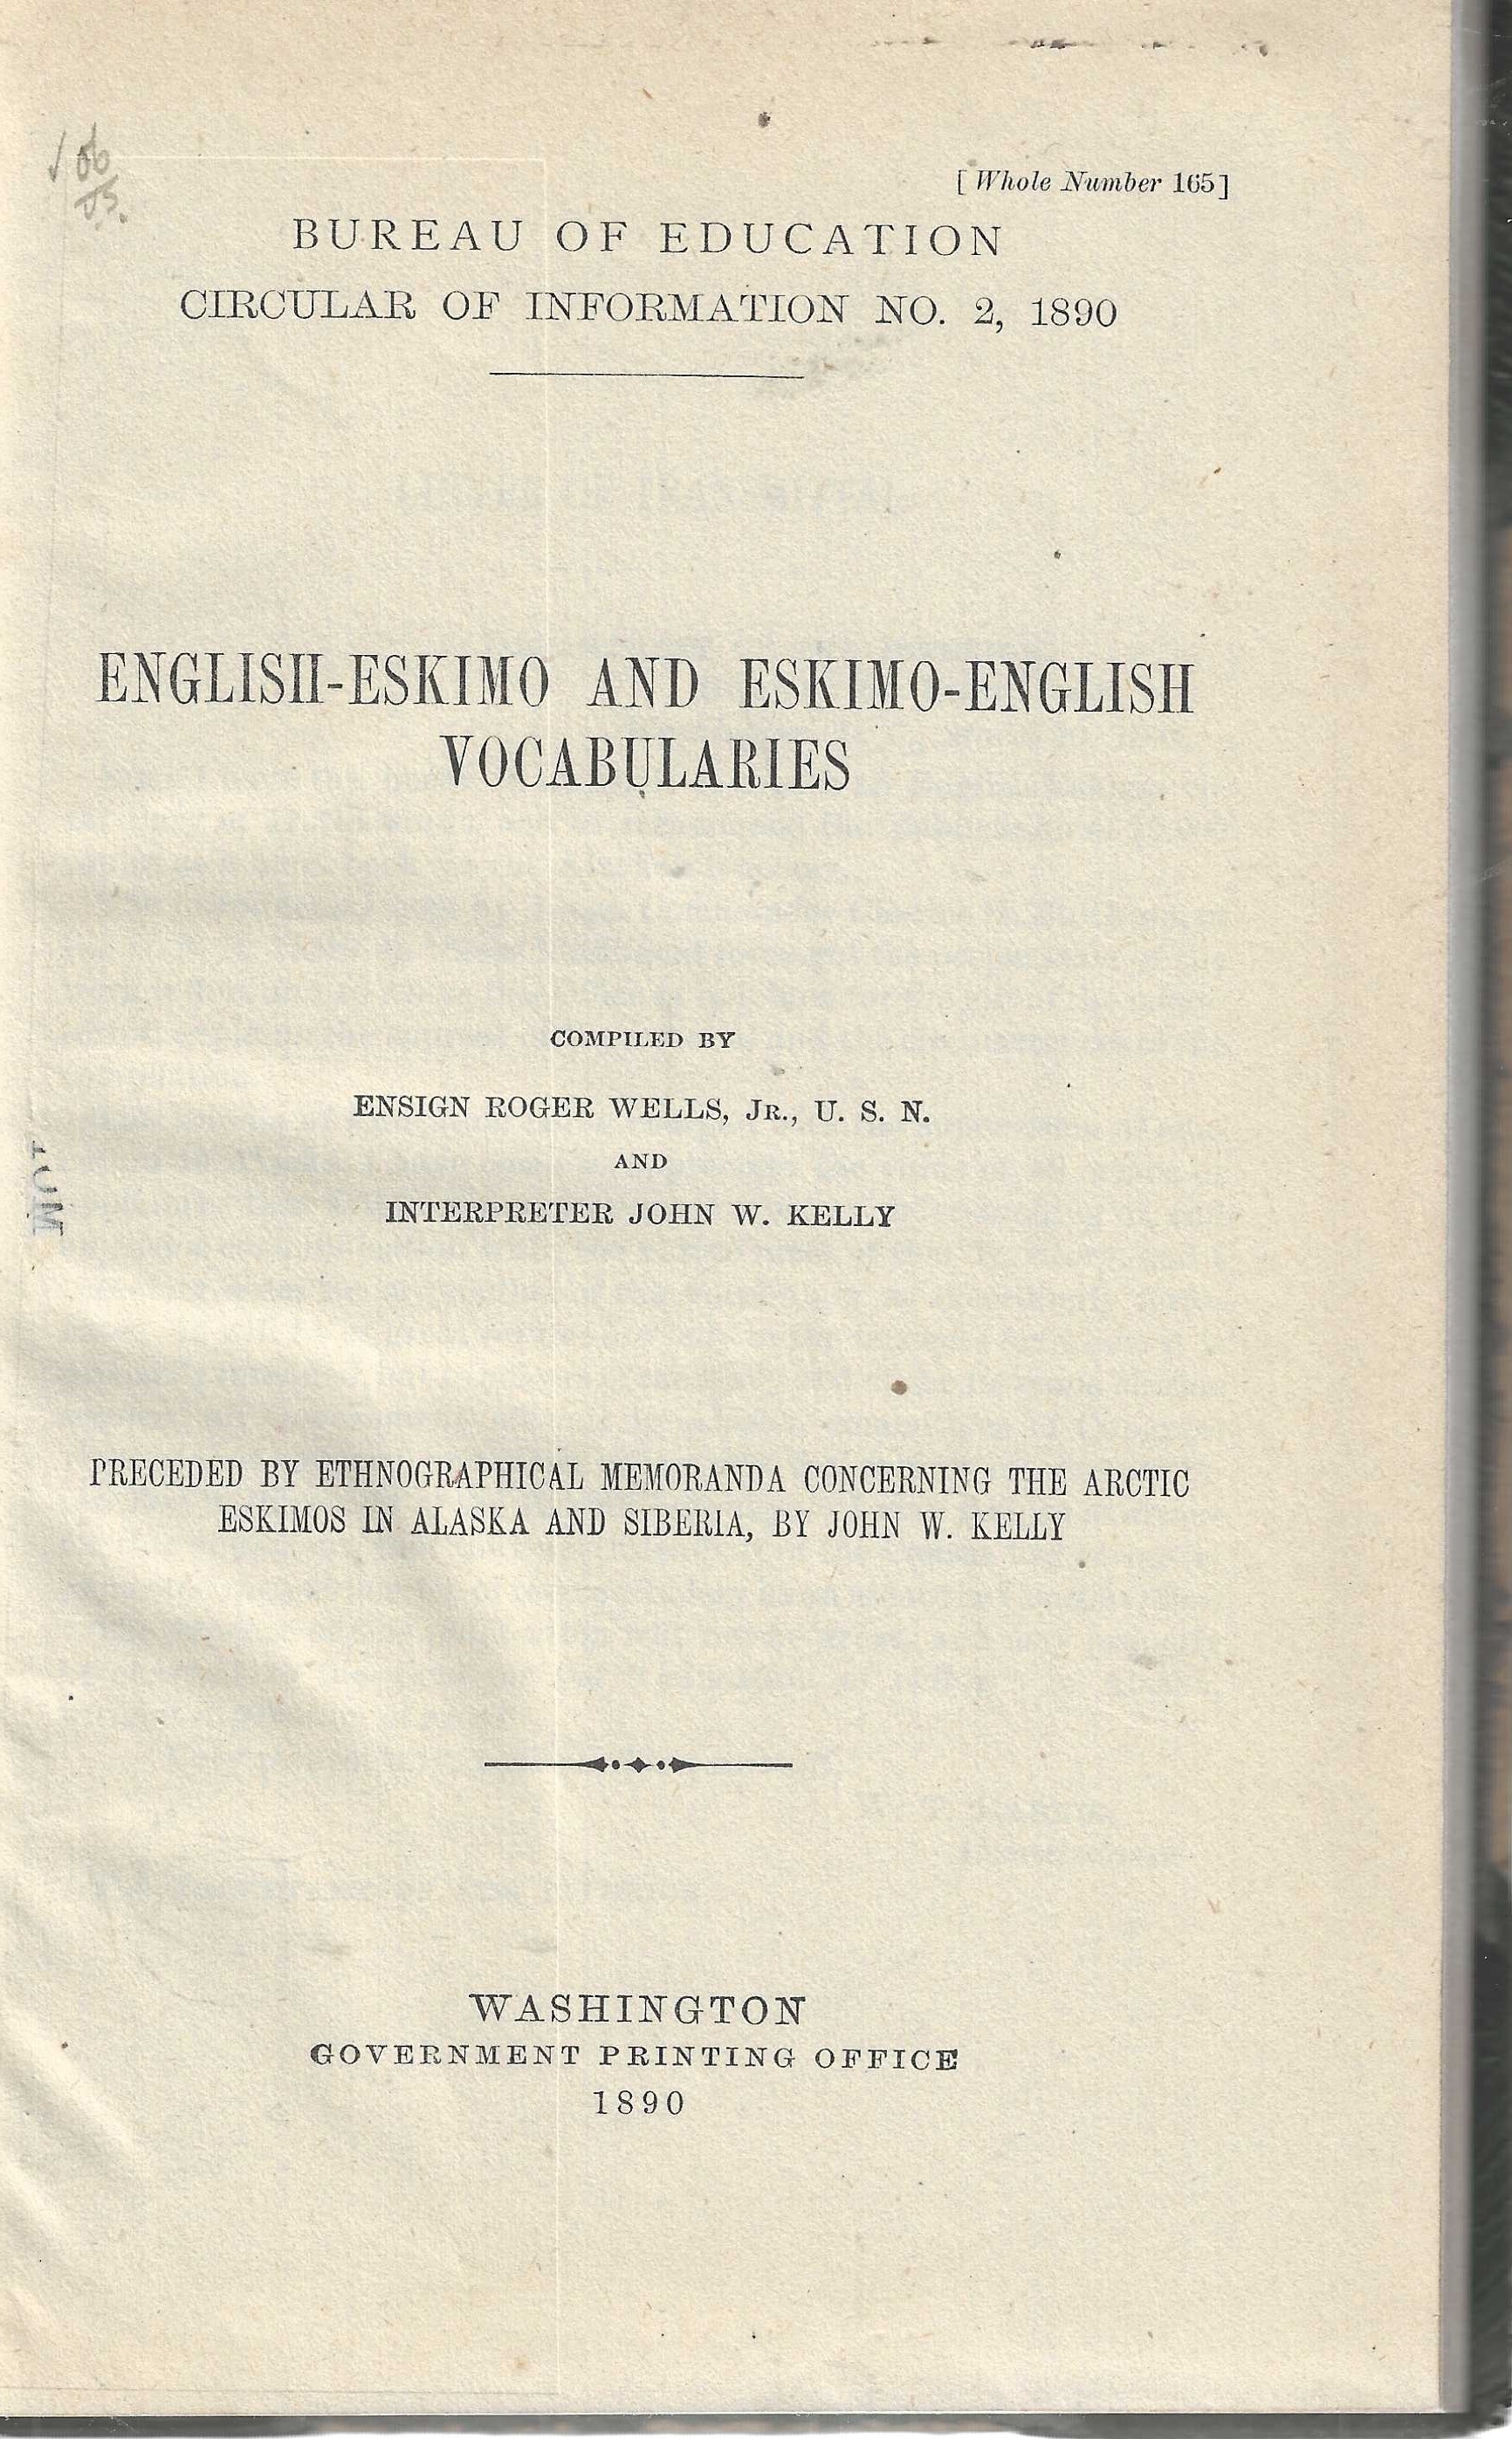 English - Eskimo and Eskimo - English Vocabularies. - Wells, Ensign Roger and Interpreter John W. Kelly (Compilers)